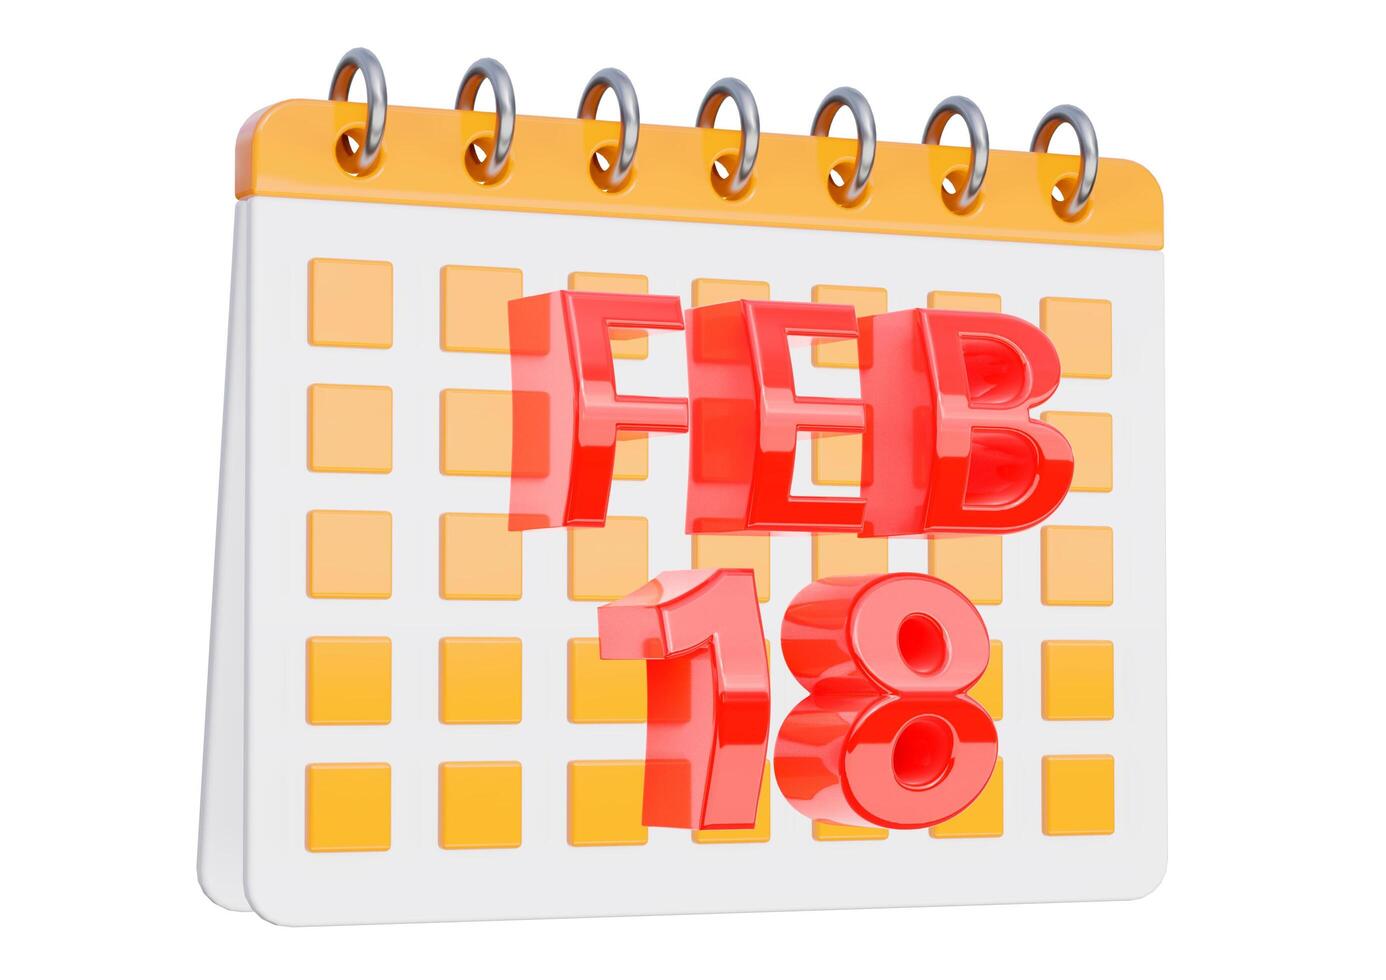 February 18. calendar design isolated on white background photo